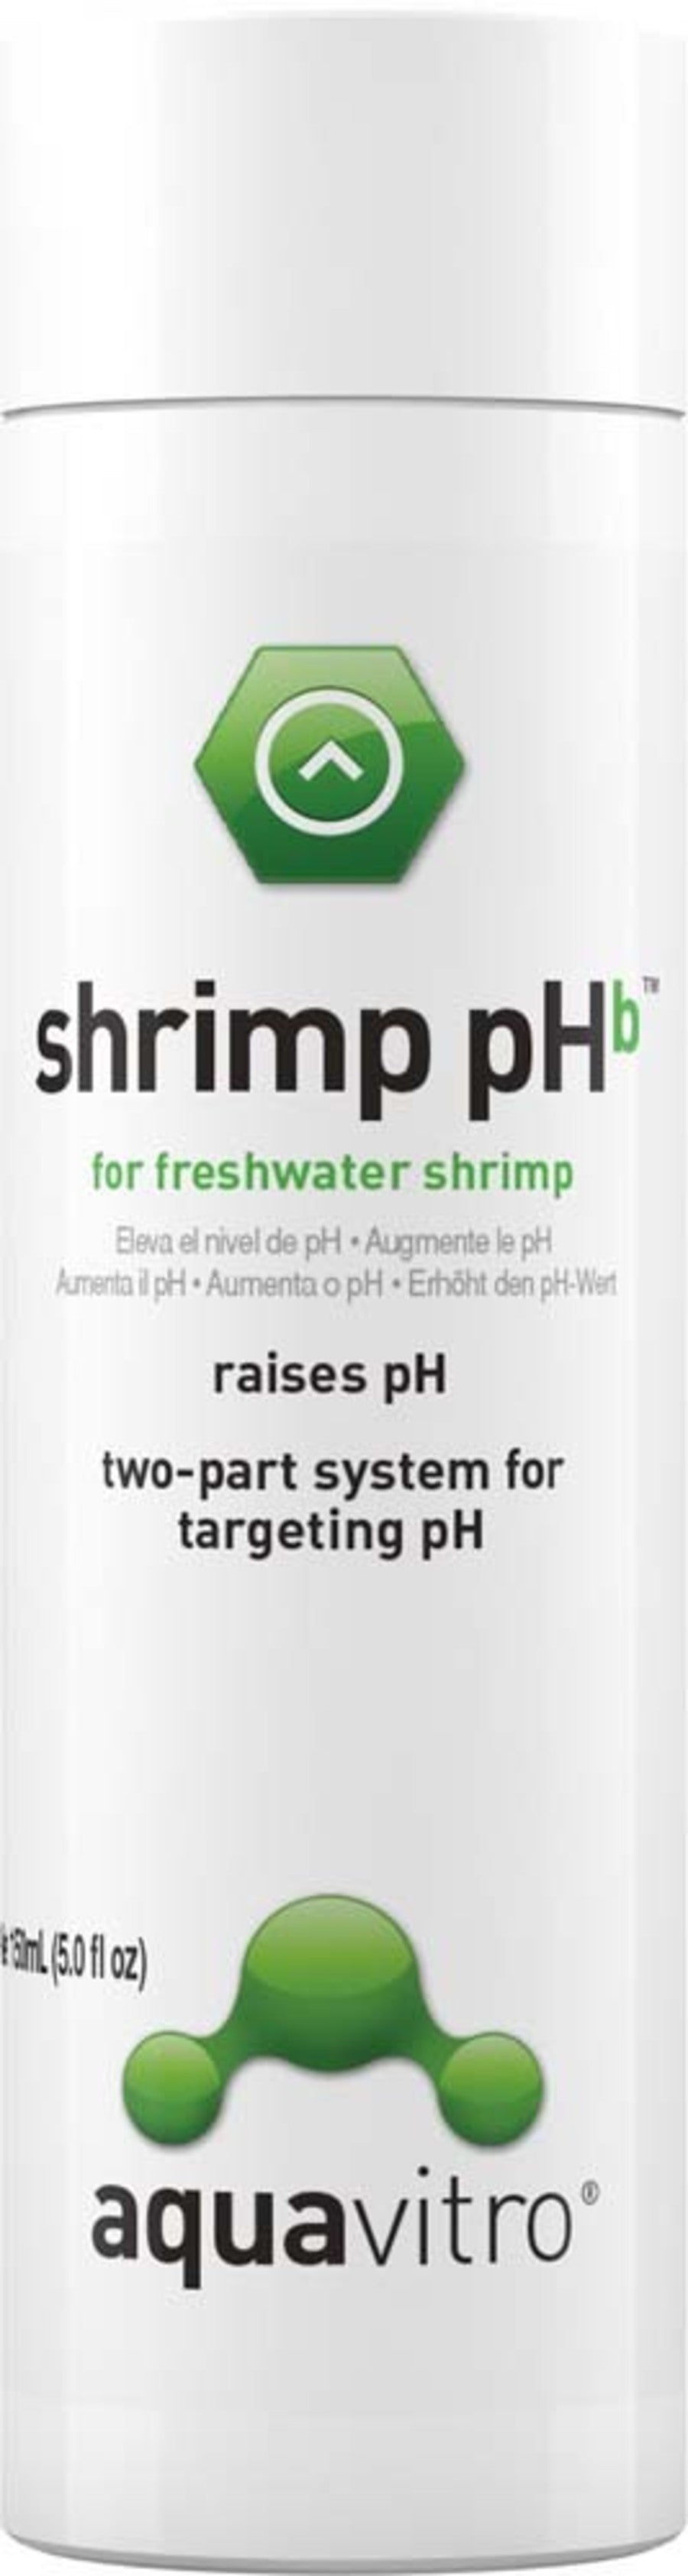 Aquavitro Shrimp pHb 150 mL